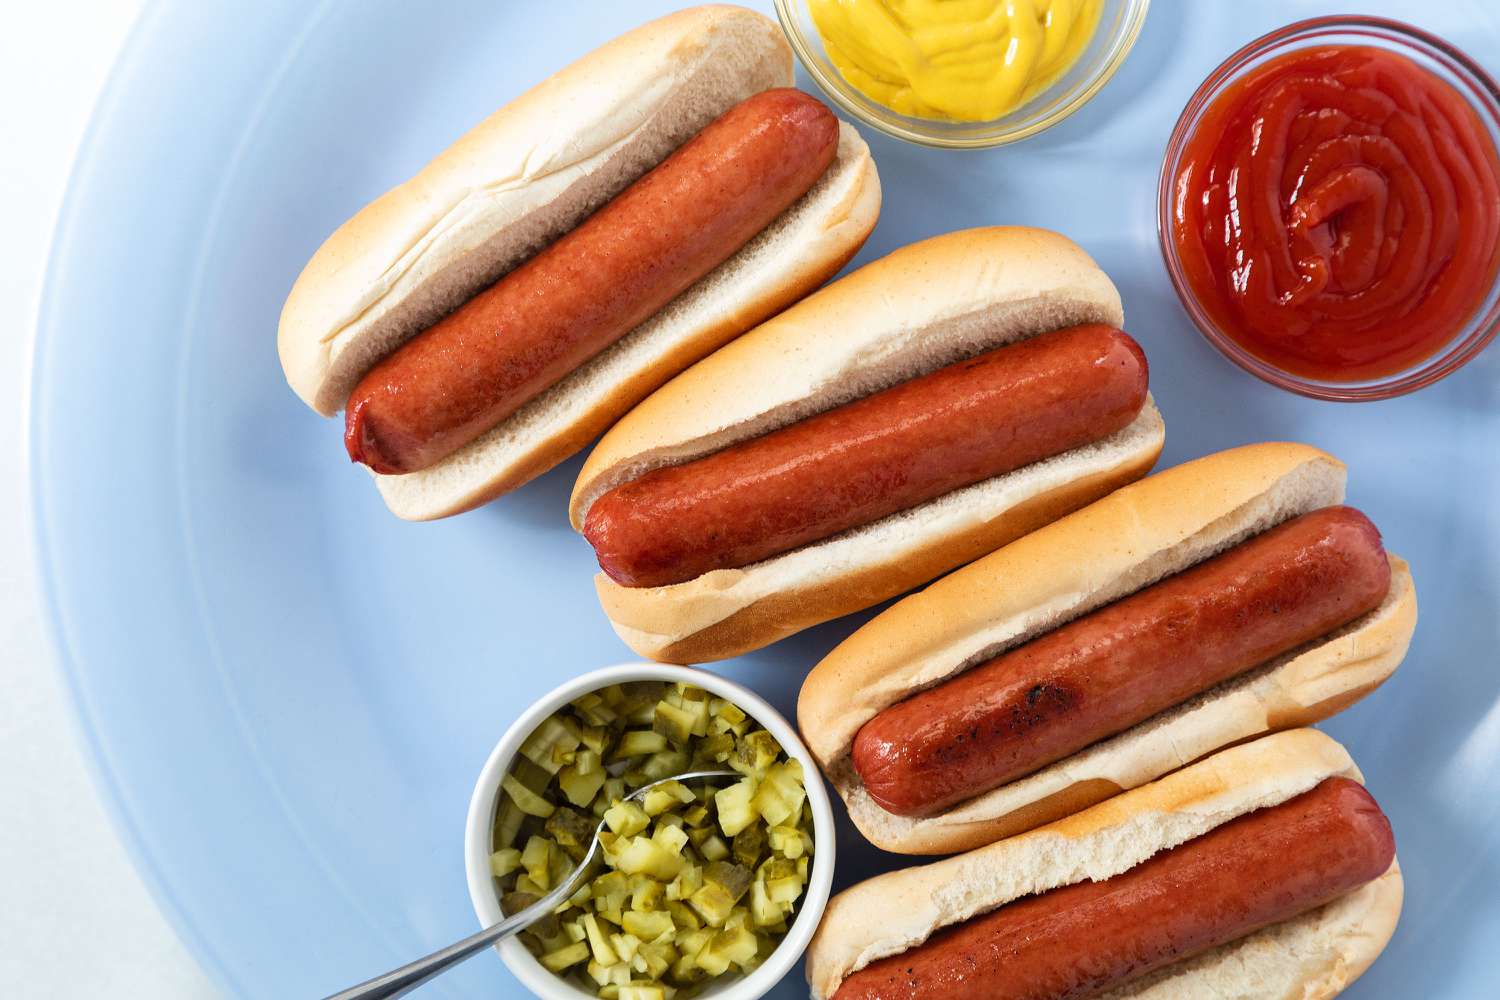 How to make the perfect Hotdog